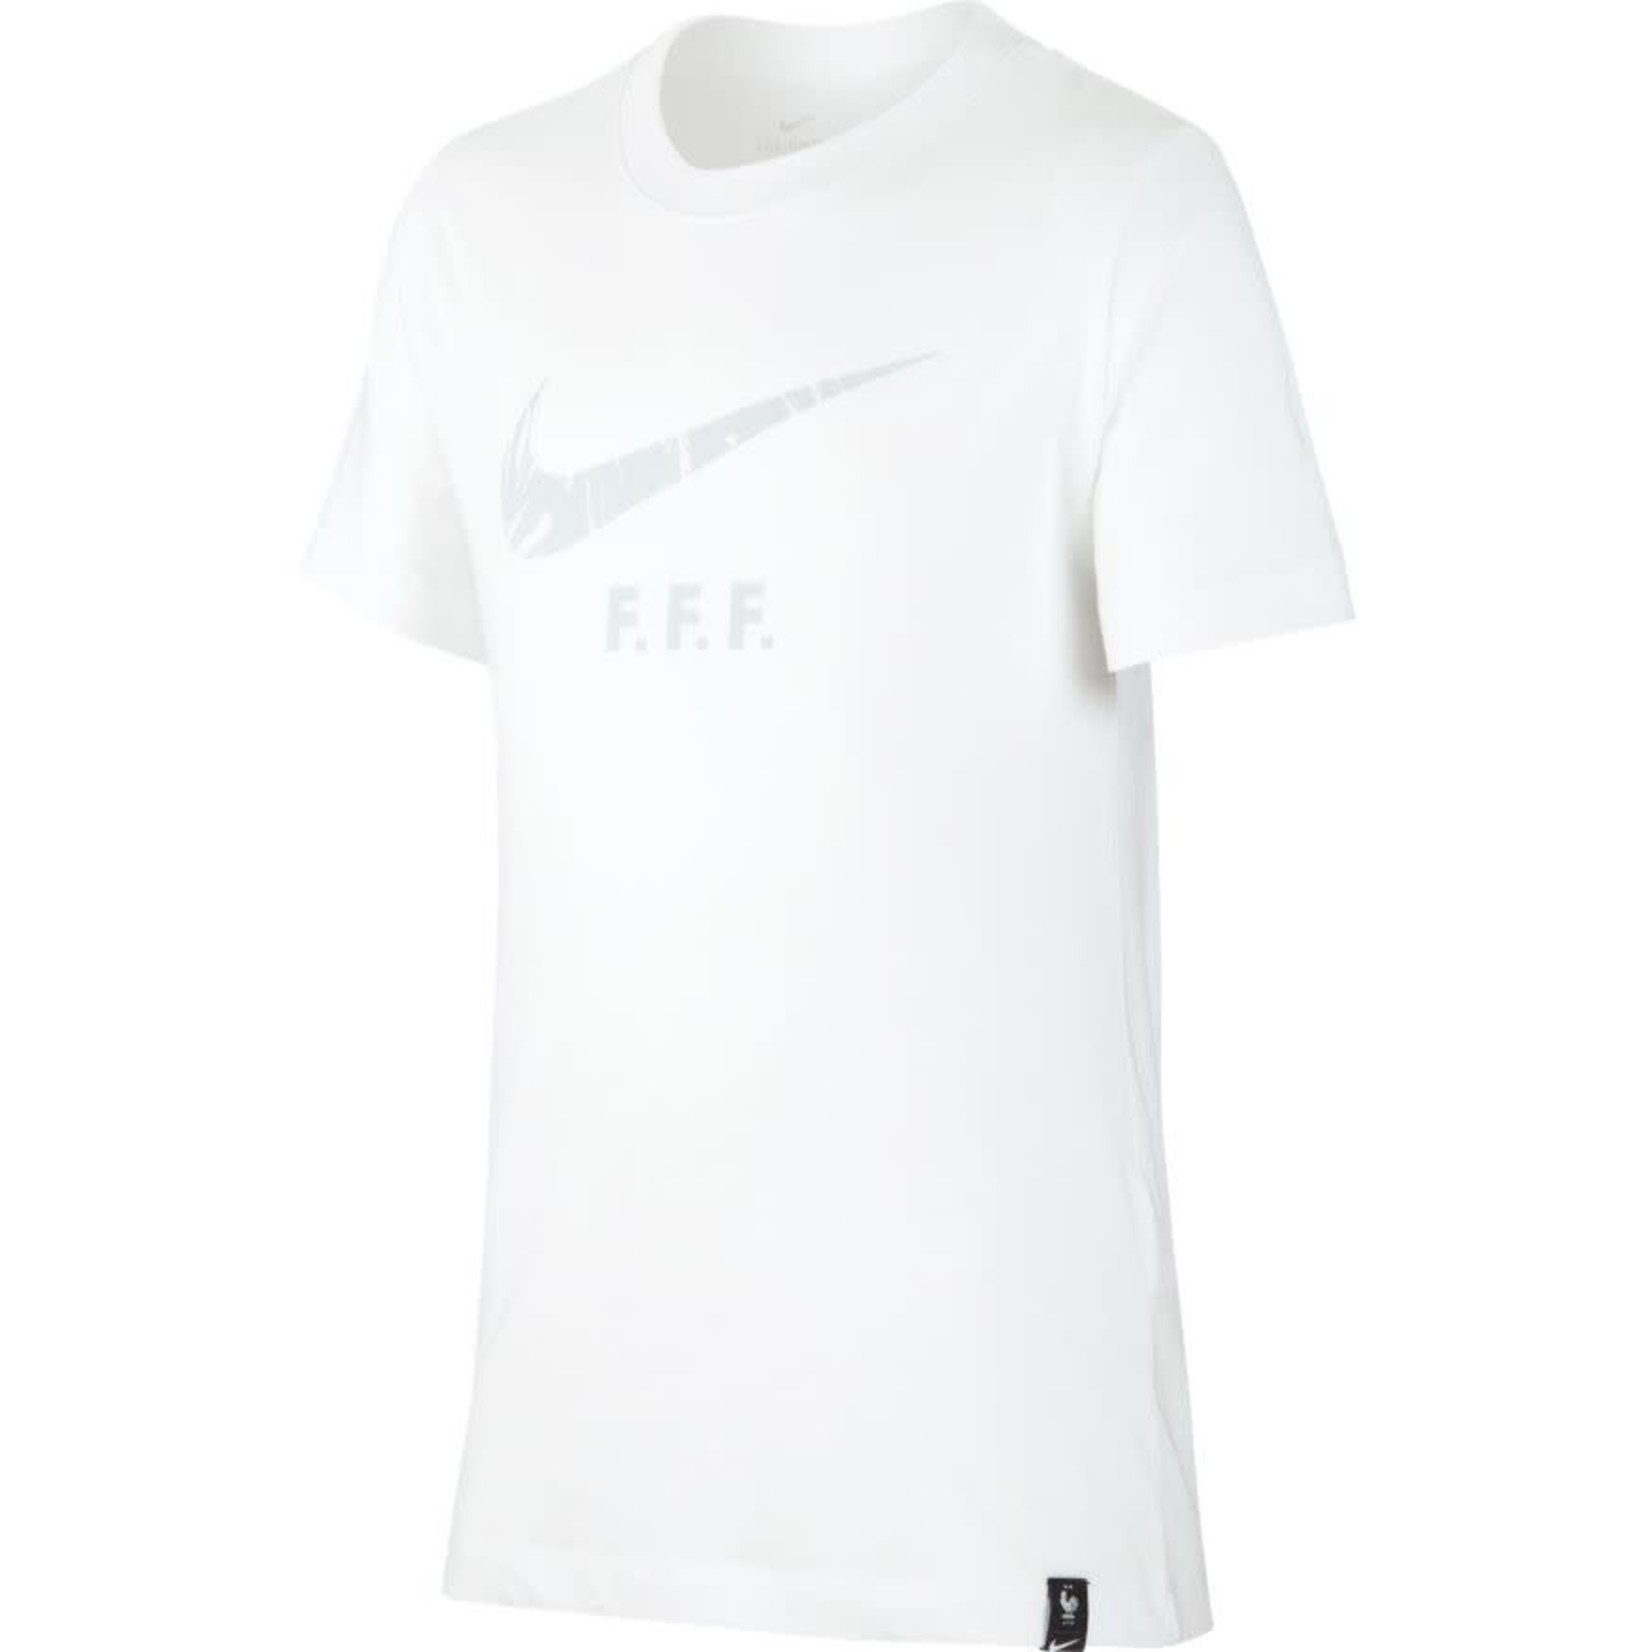 Nike France T-Shirt - White